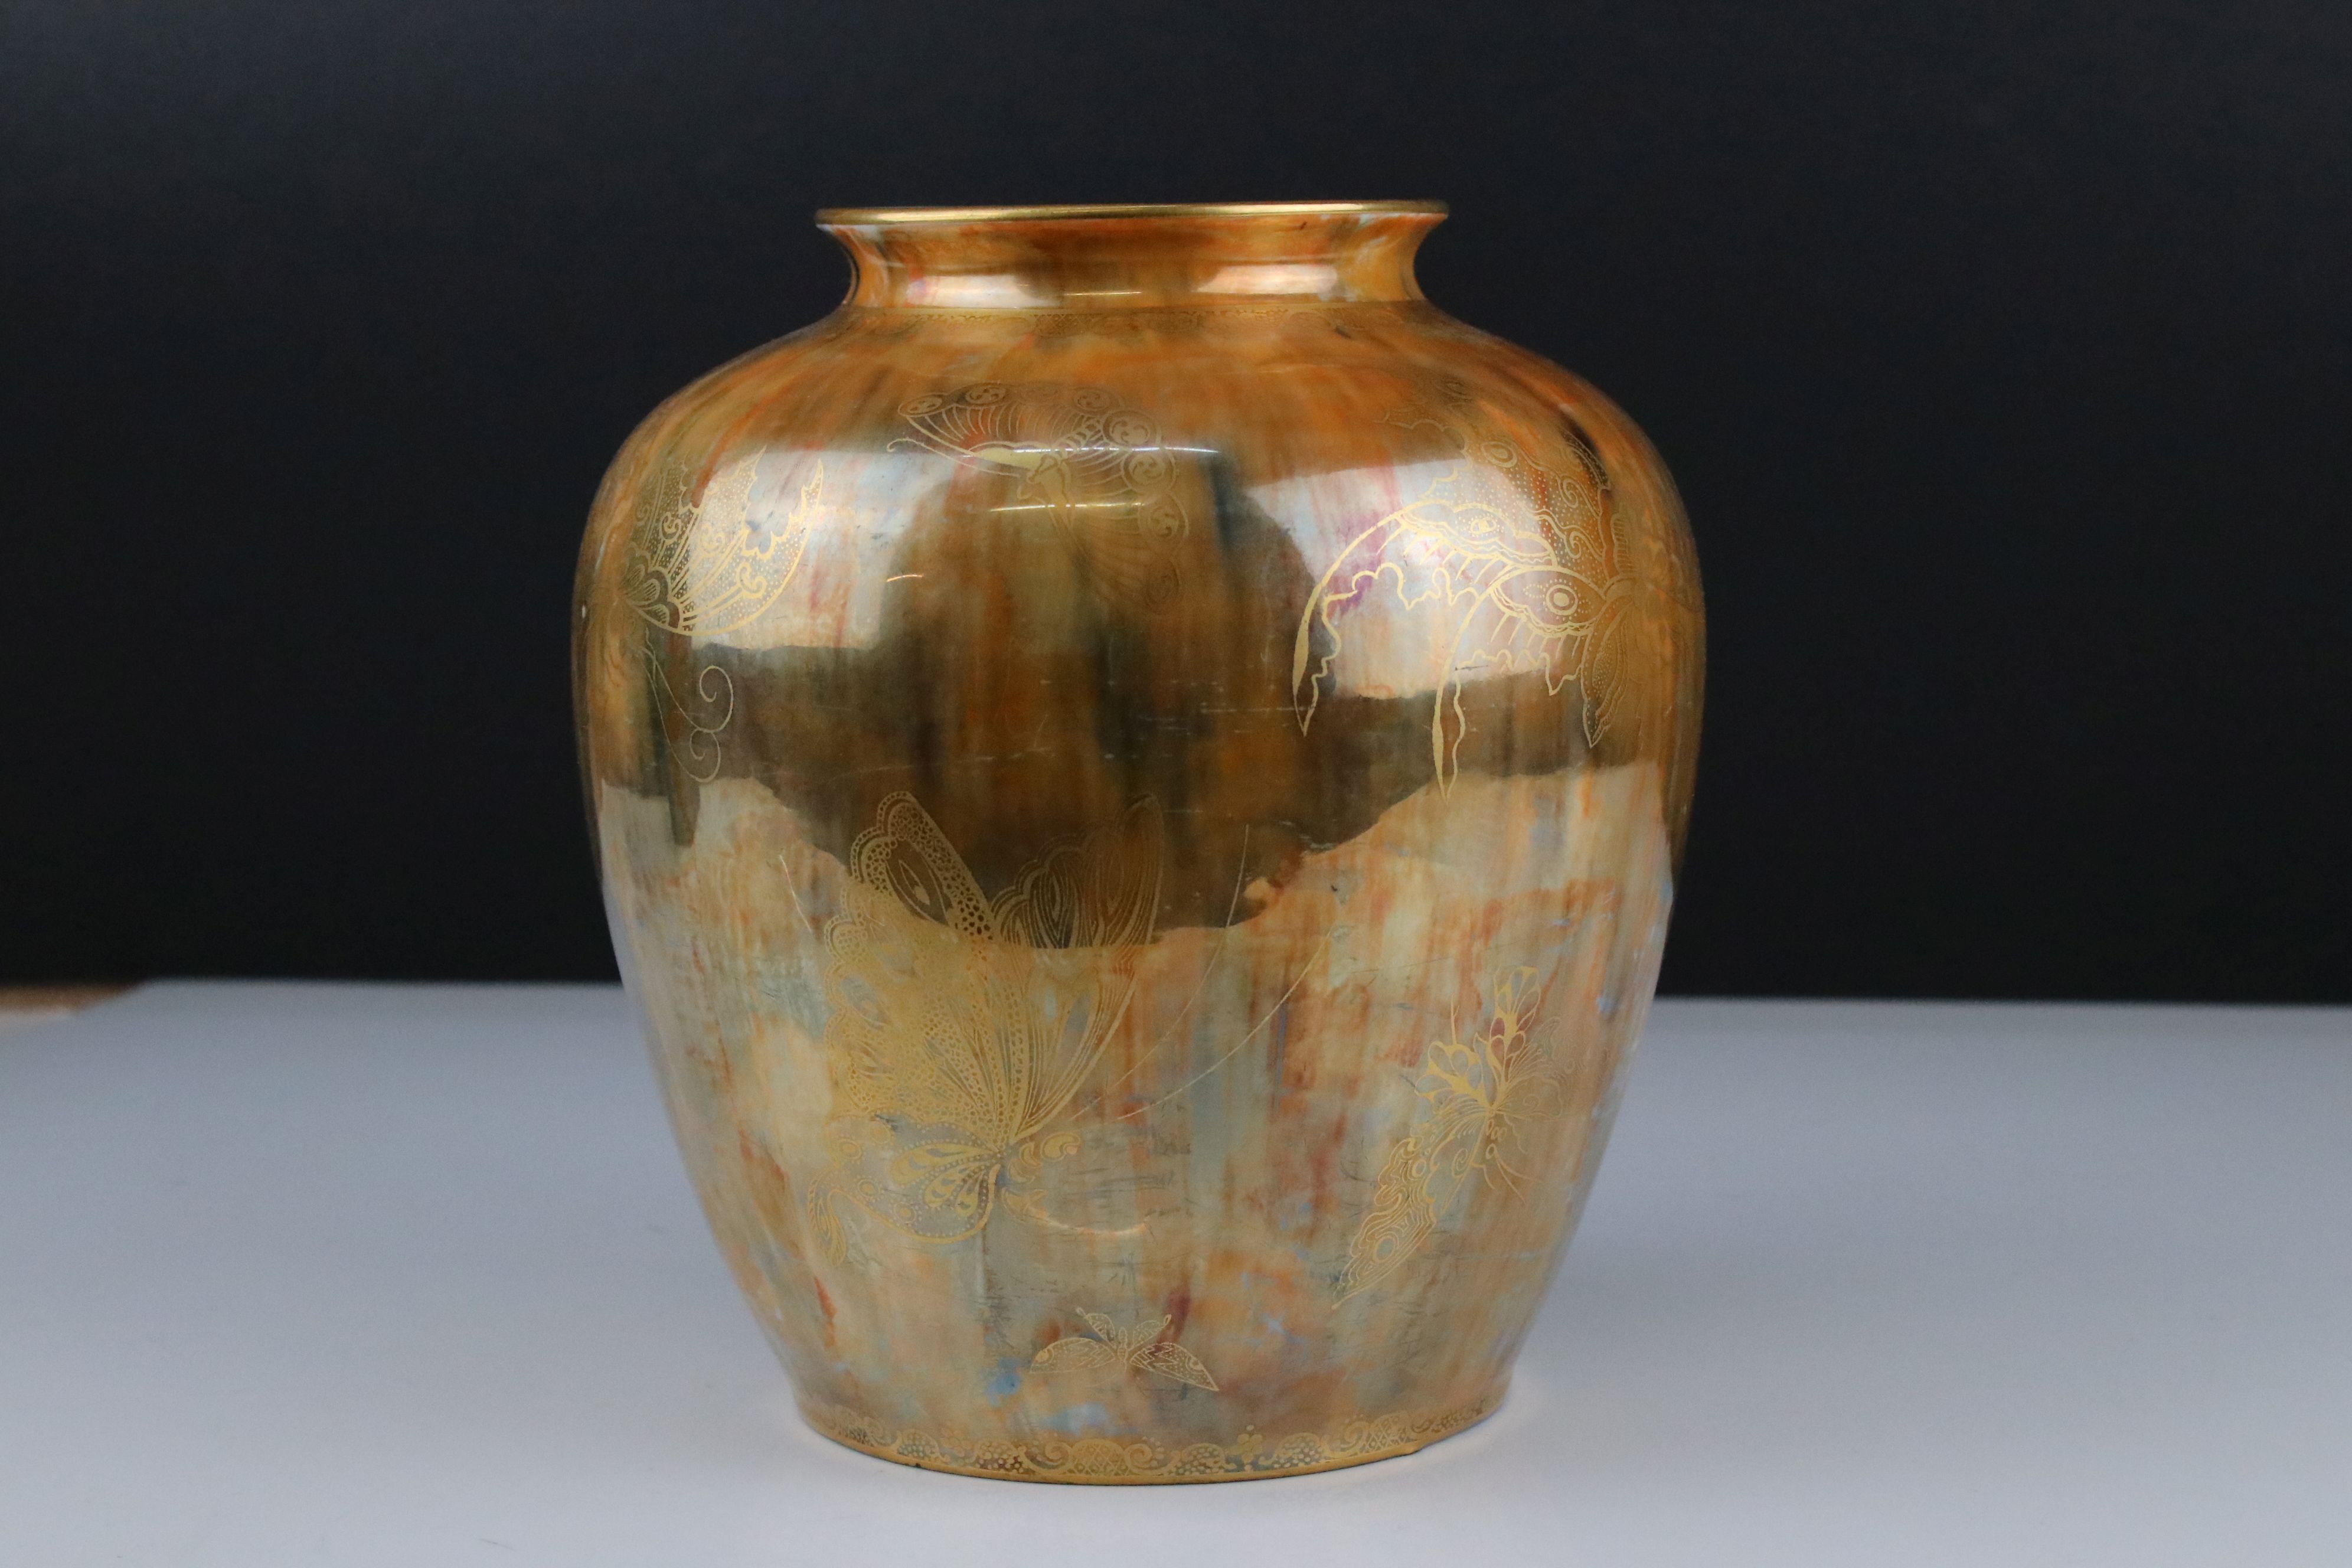 1920s Wedgwood gold lustre butterfly patterned vase by Daizy Makeig-Jones, pattern no. Z4830